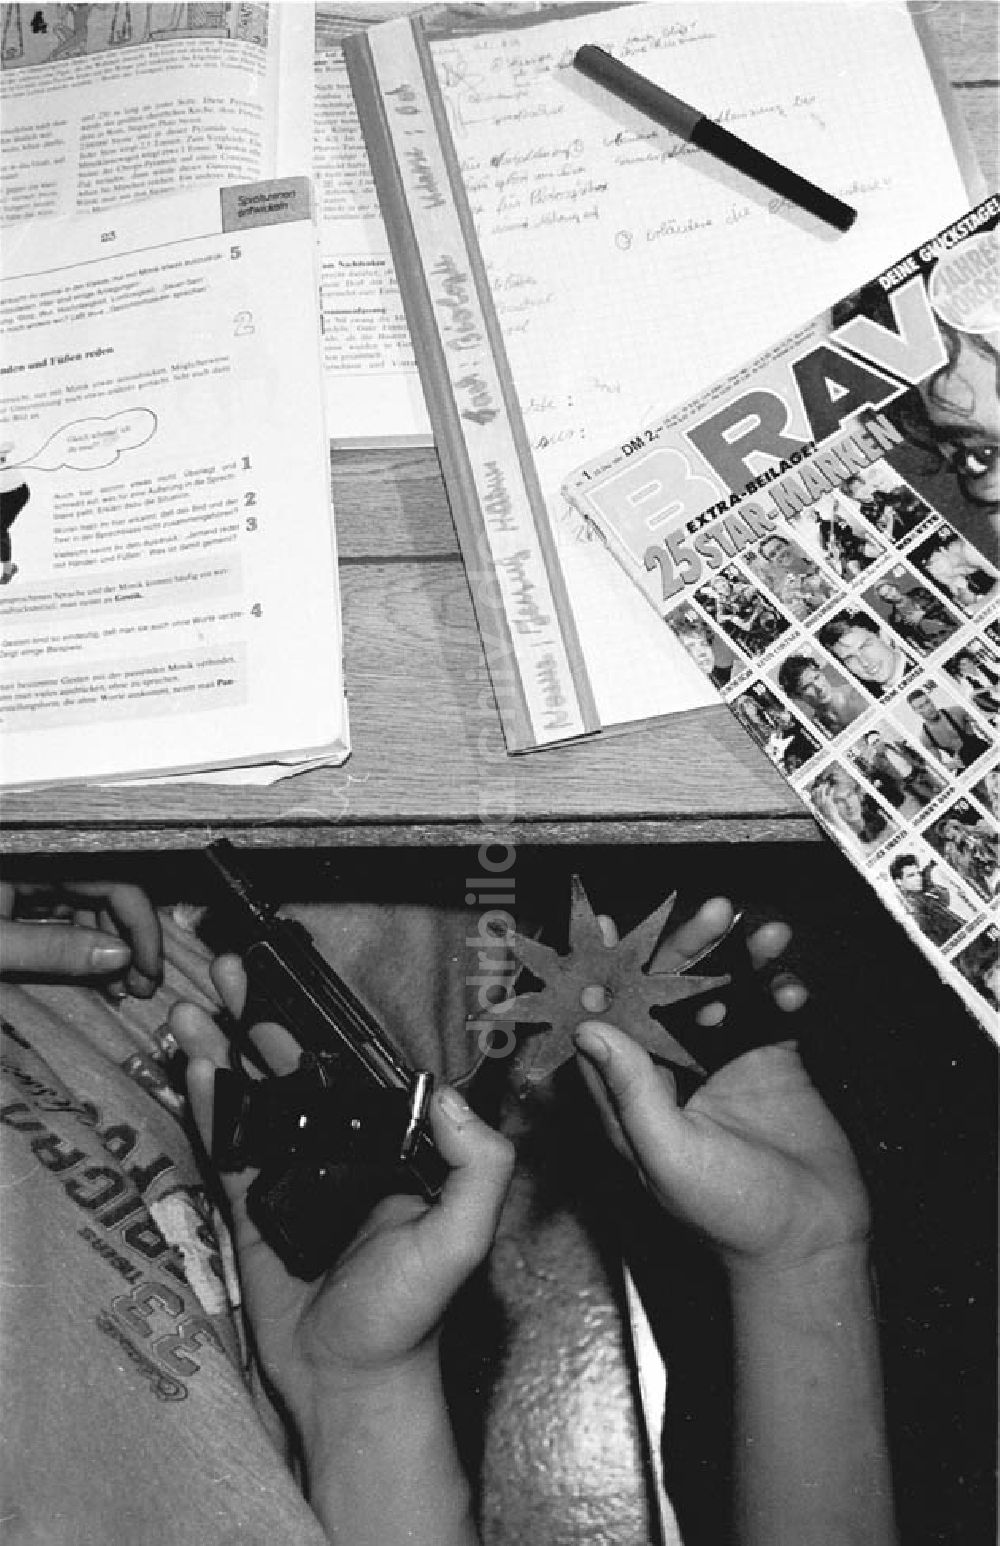 DDR-Fotoarchiv: Berlin - Jugendkriminalität an Schulen 28.09.1992